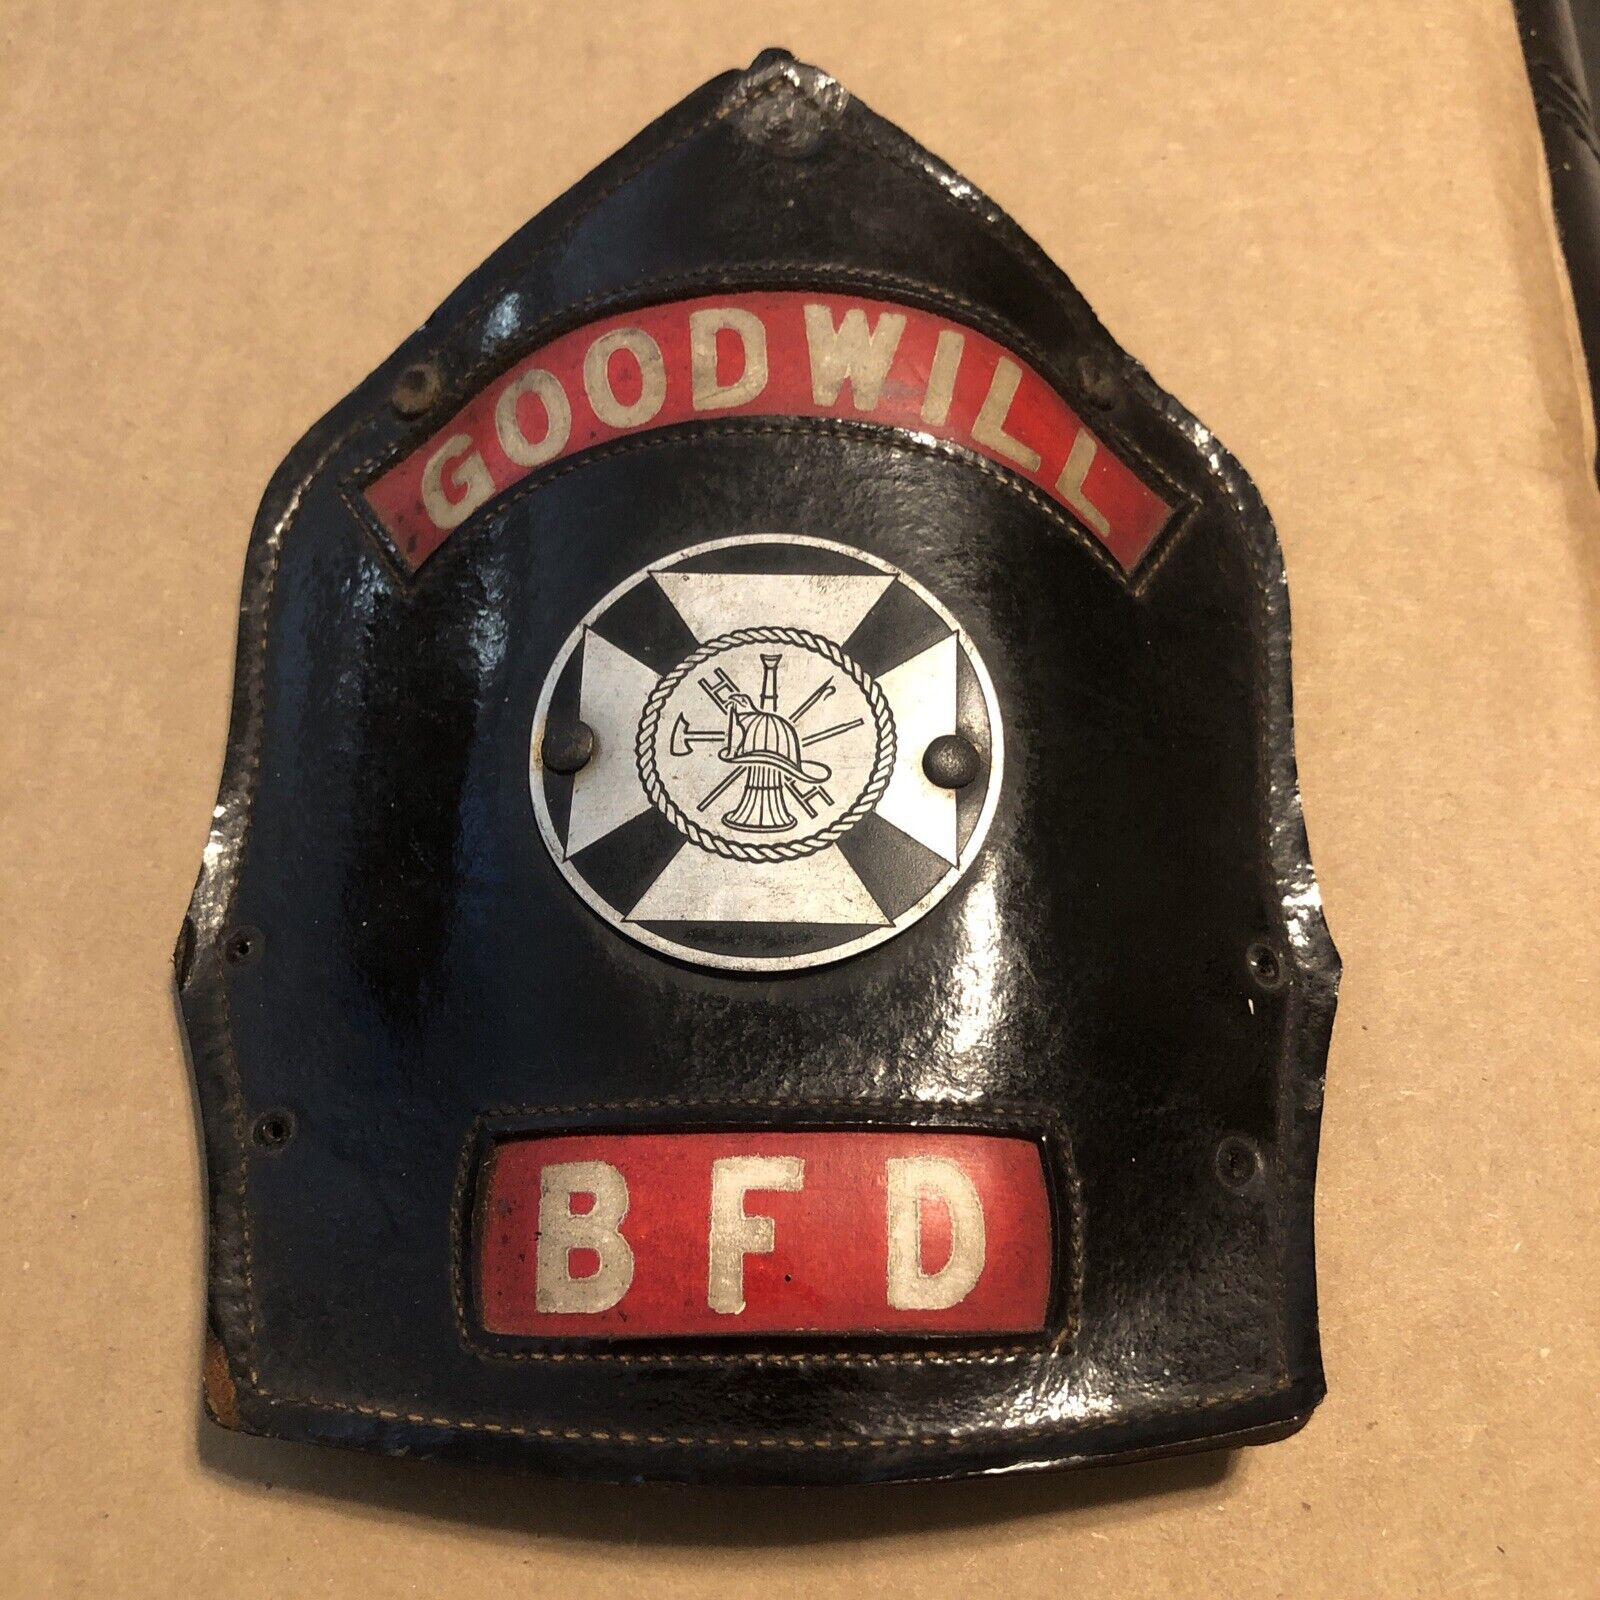 VINTAGE GOODWILL BFD FIREMAN HELMET LEATHER FRONT BADGE SHIELD CAIRNS & BRO Dept